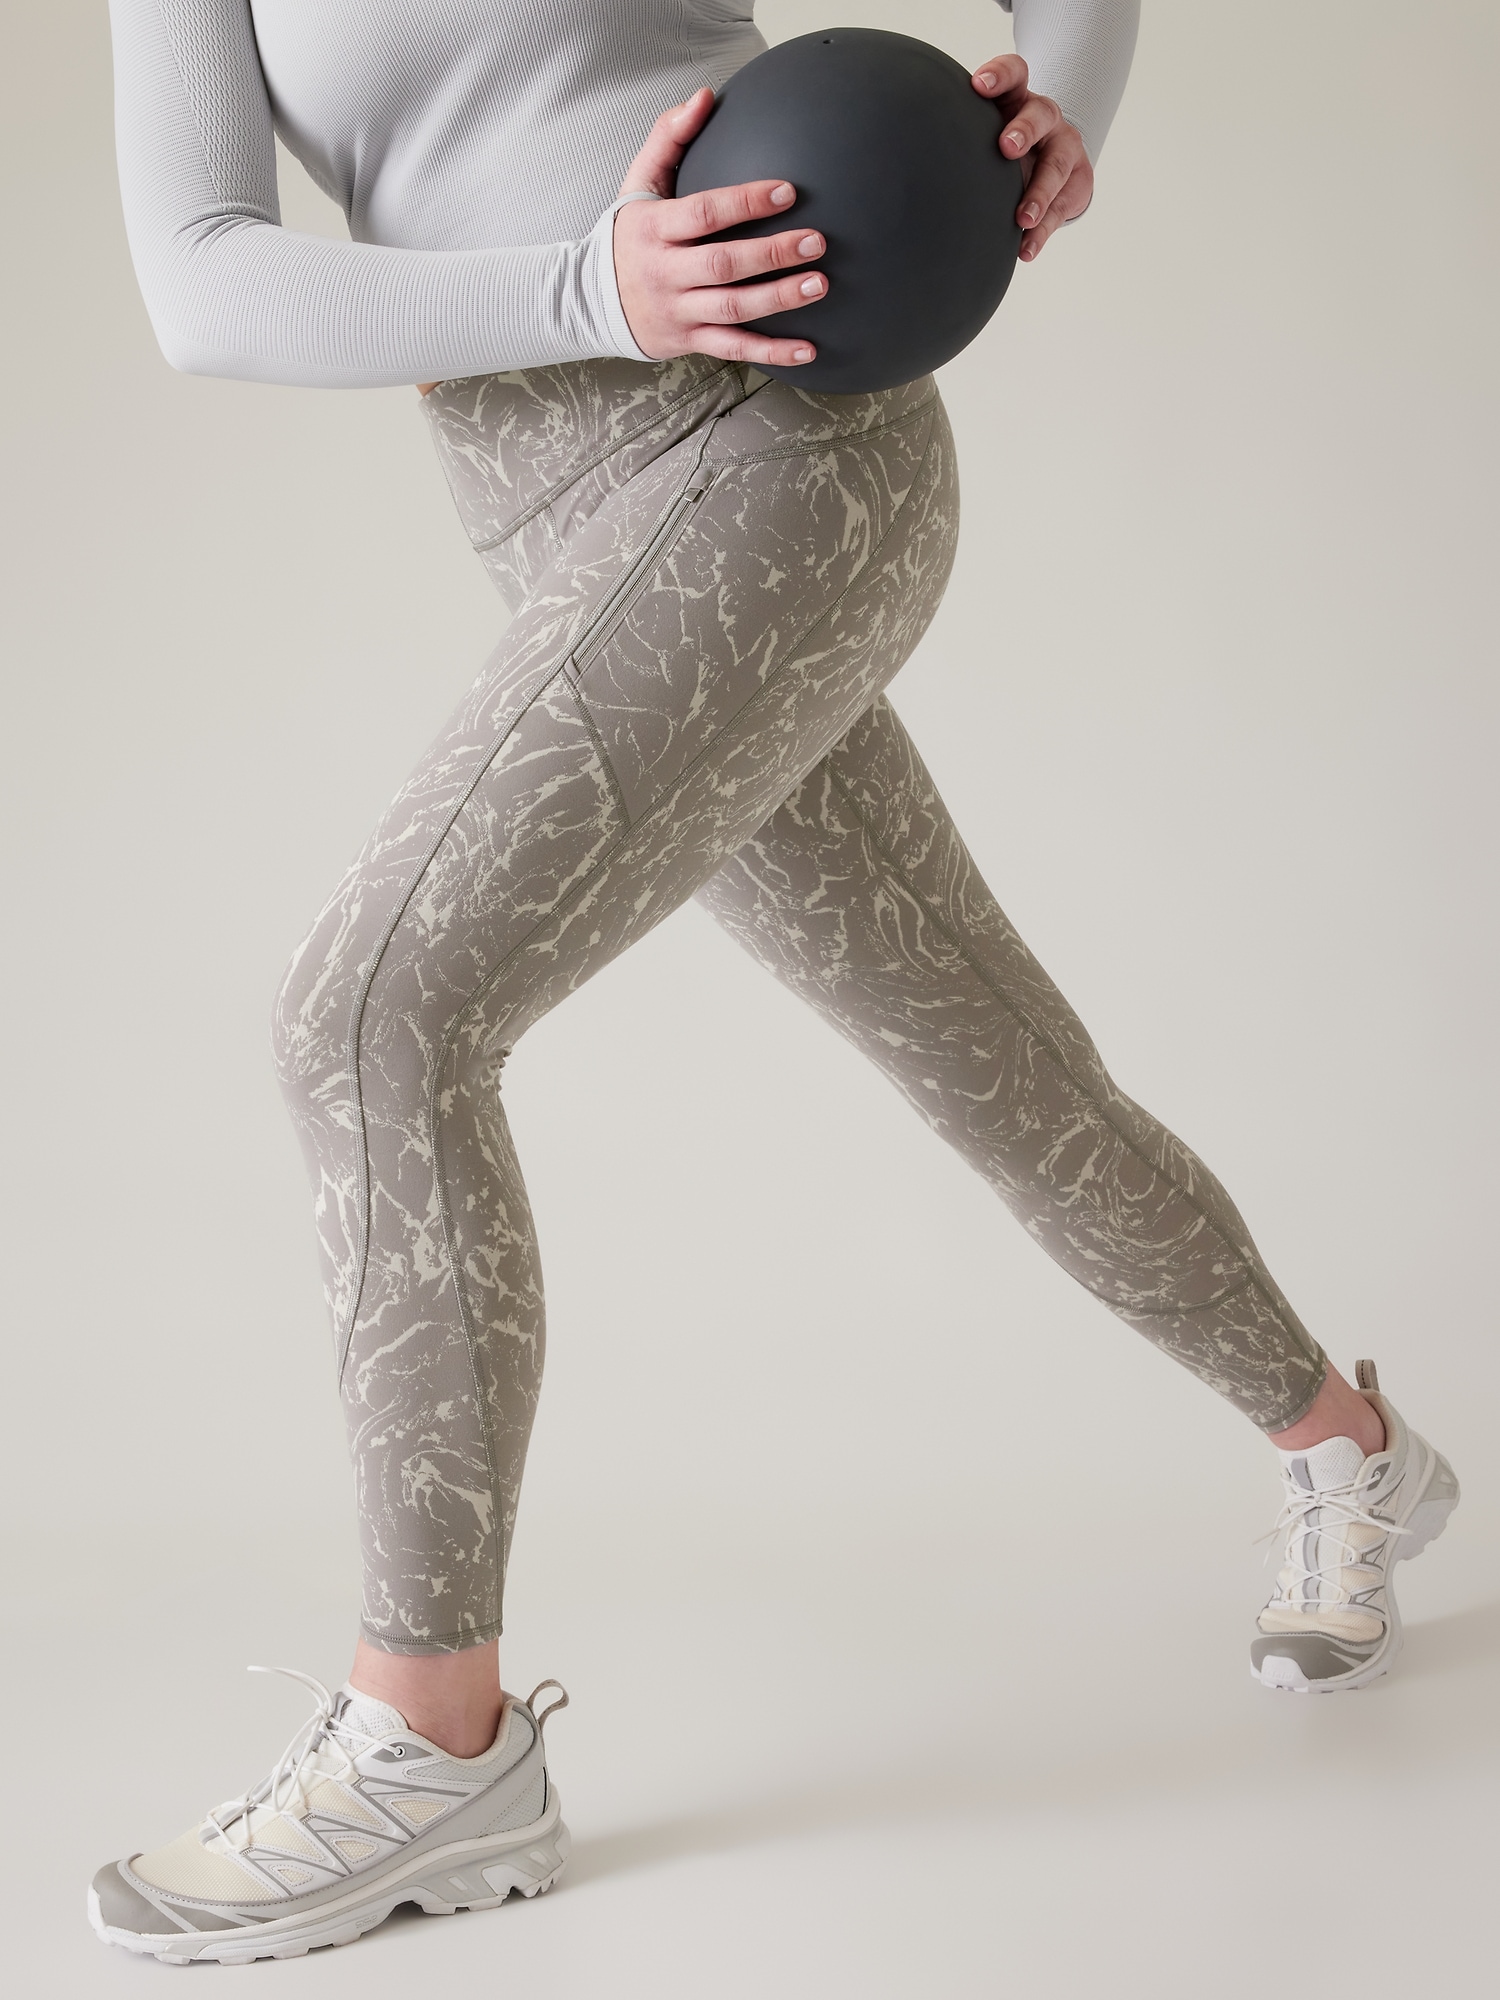 Athleta Rainier Printed Tights - Women's